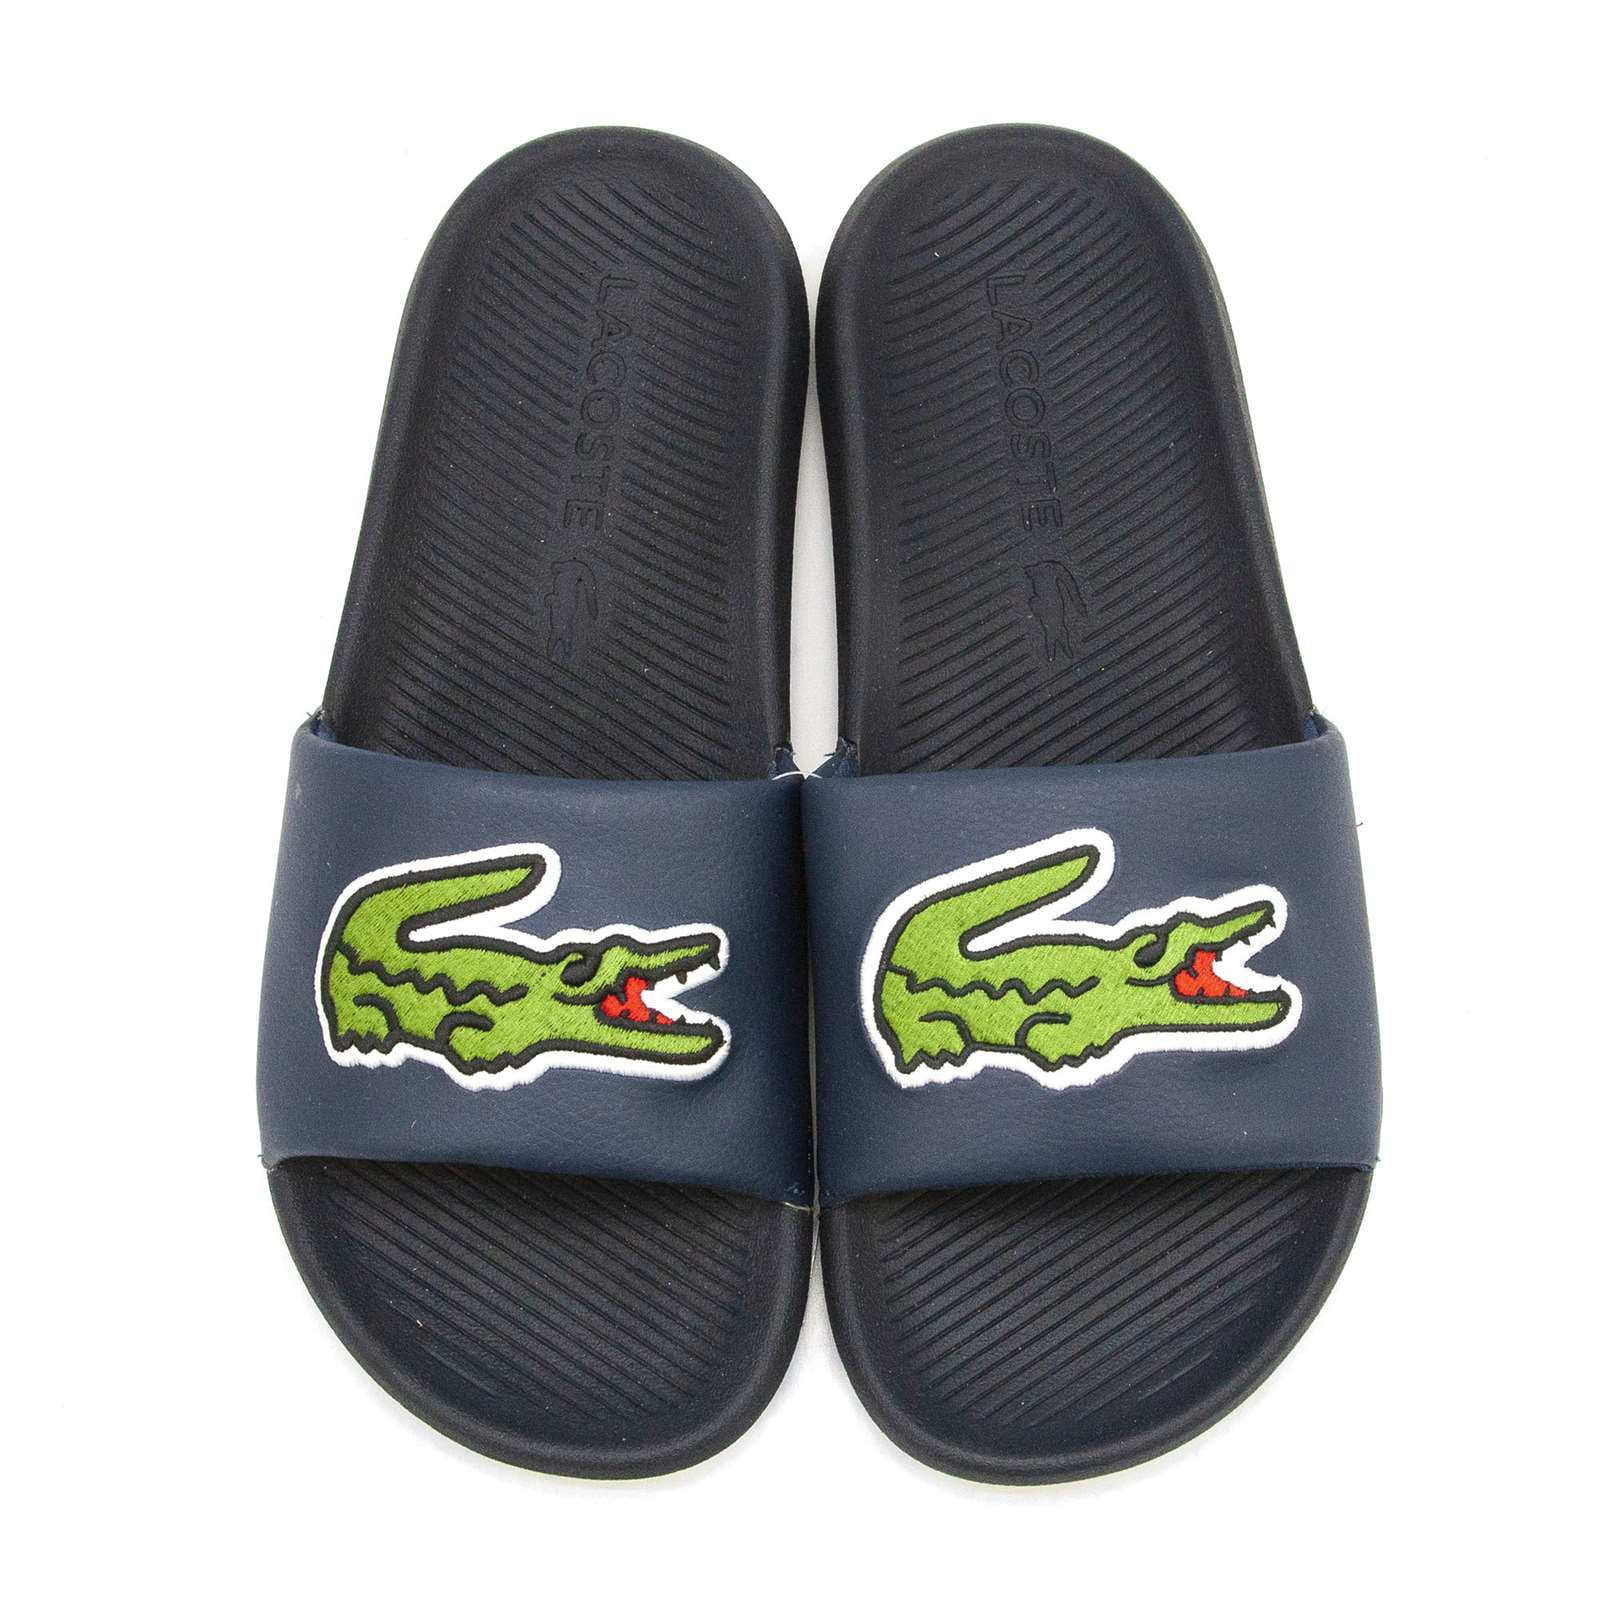 Lacoste Men Croco Slide Sandals - Walmart.com